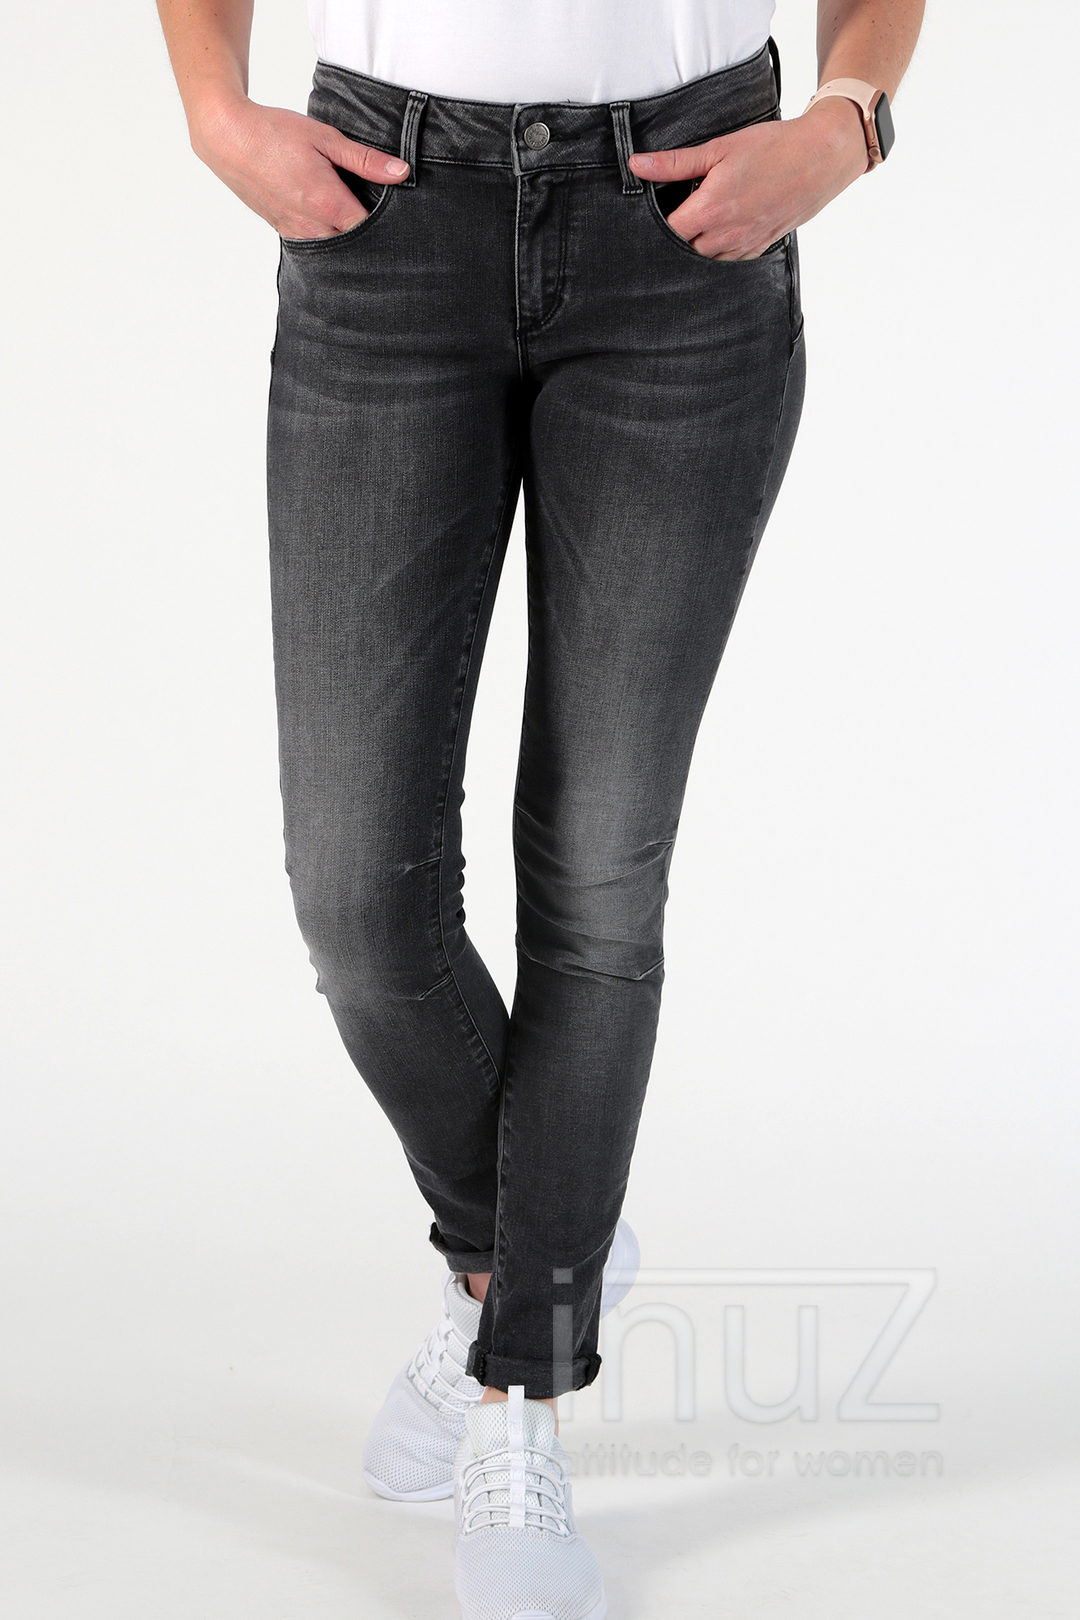 Miracle of Denim - MOD Jeans - MOD200008 Eva jeans grijs